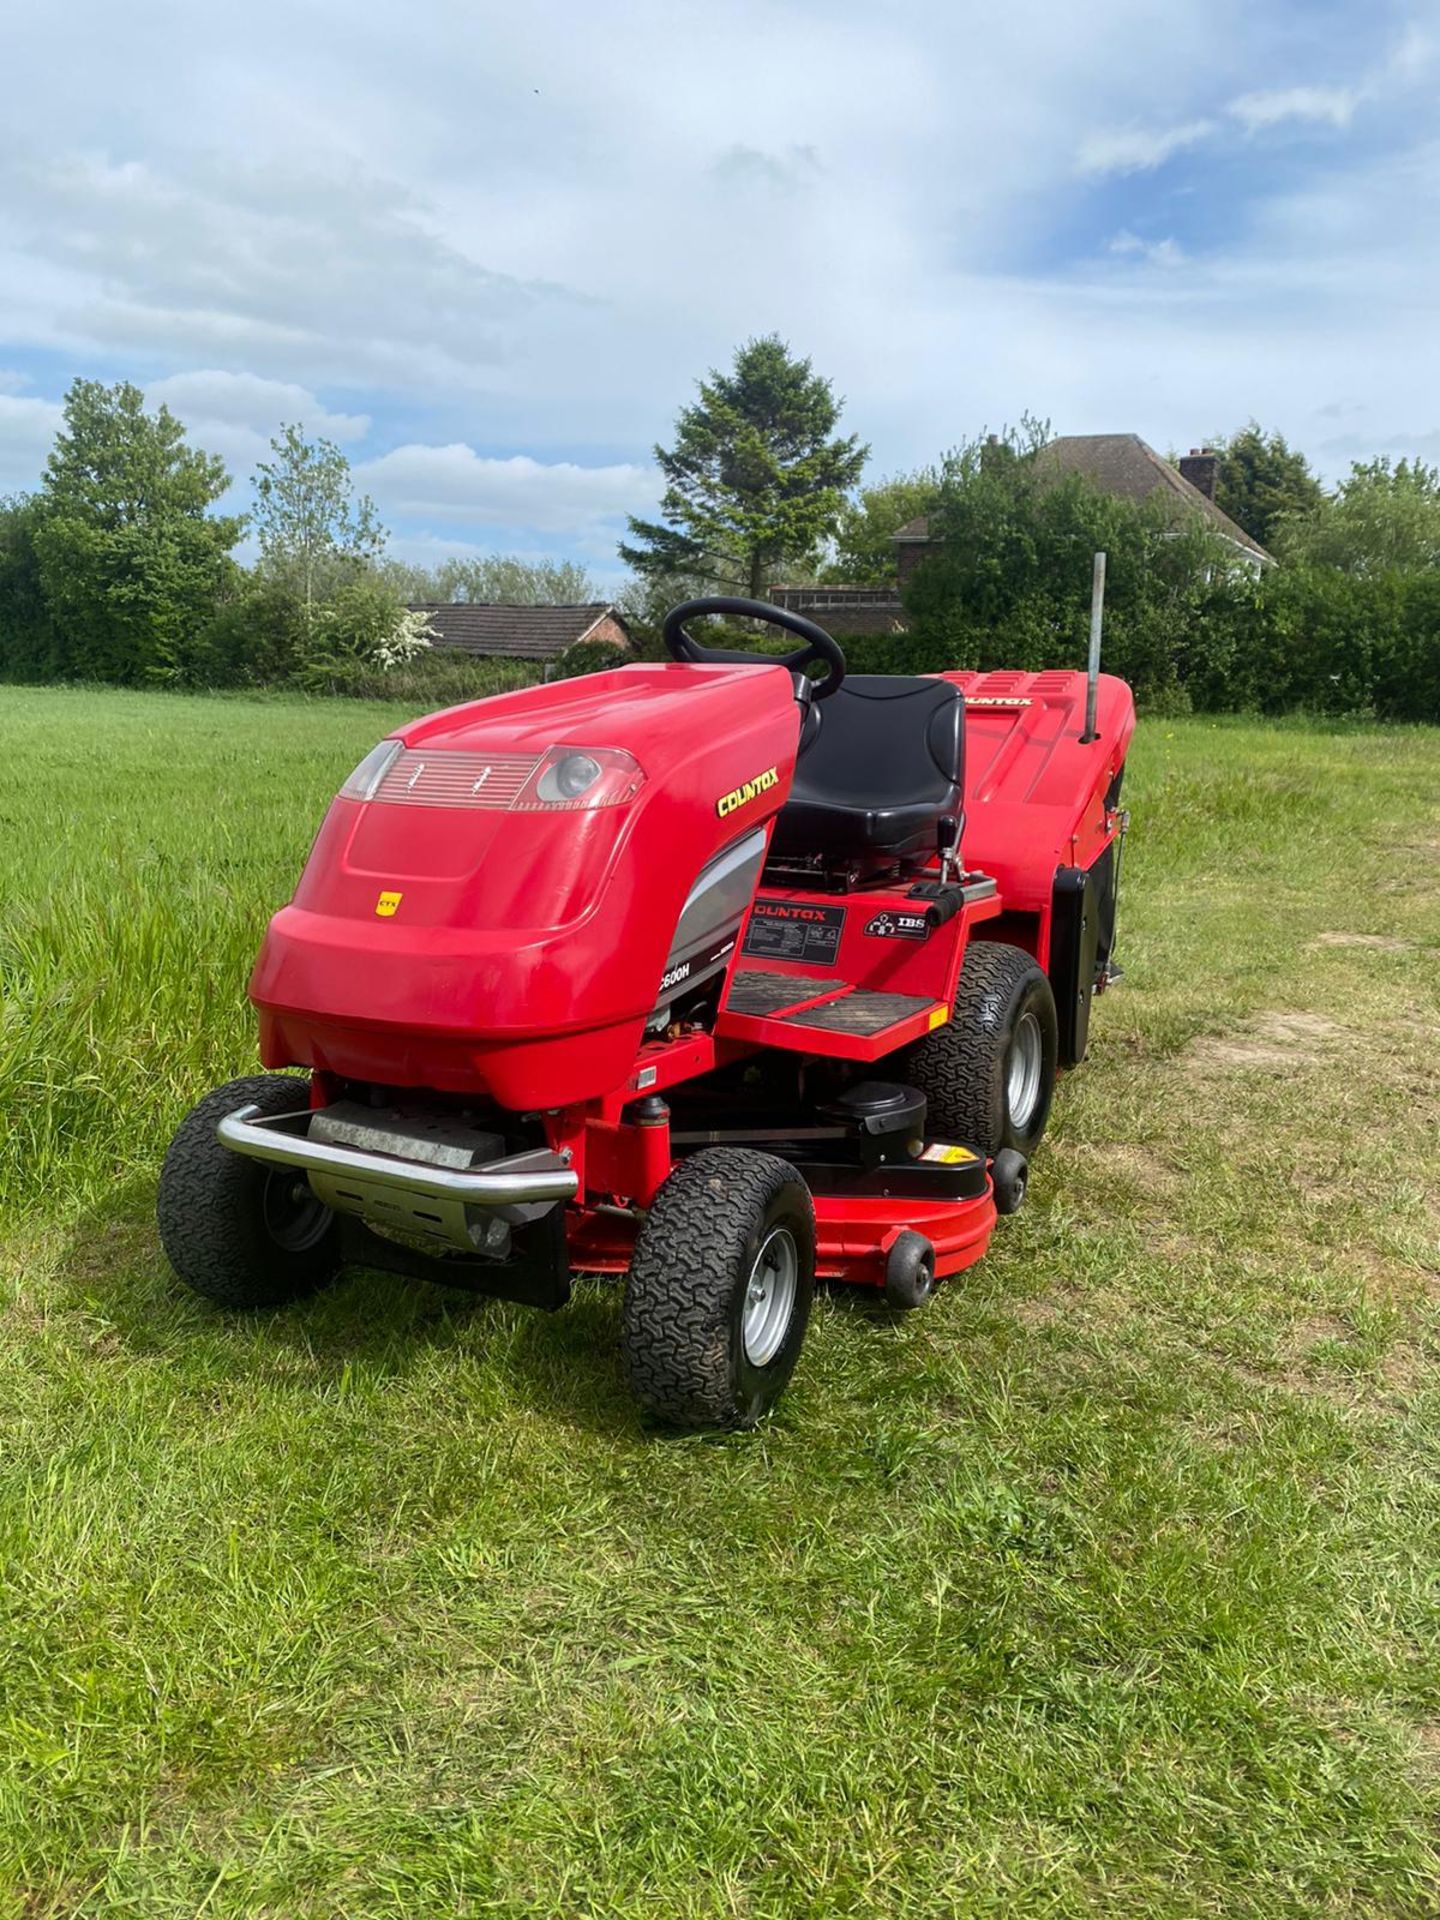 COUNTAX C600H ride on lawn mower, 42 inch cutting deck *PLUS VAT*